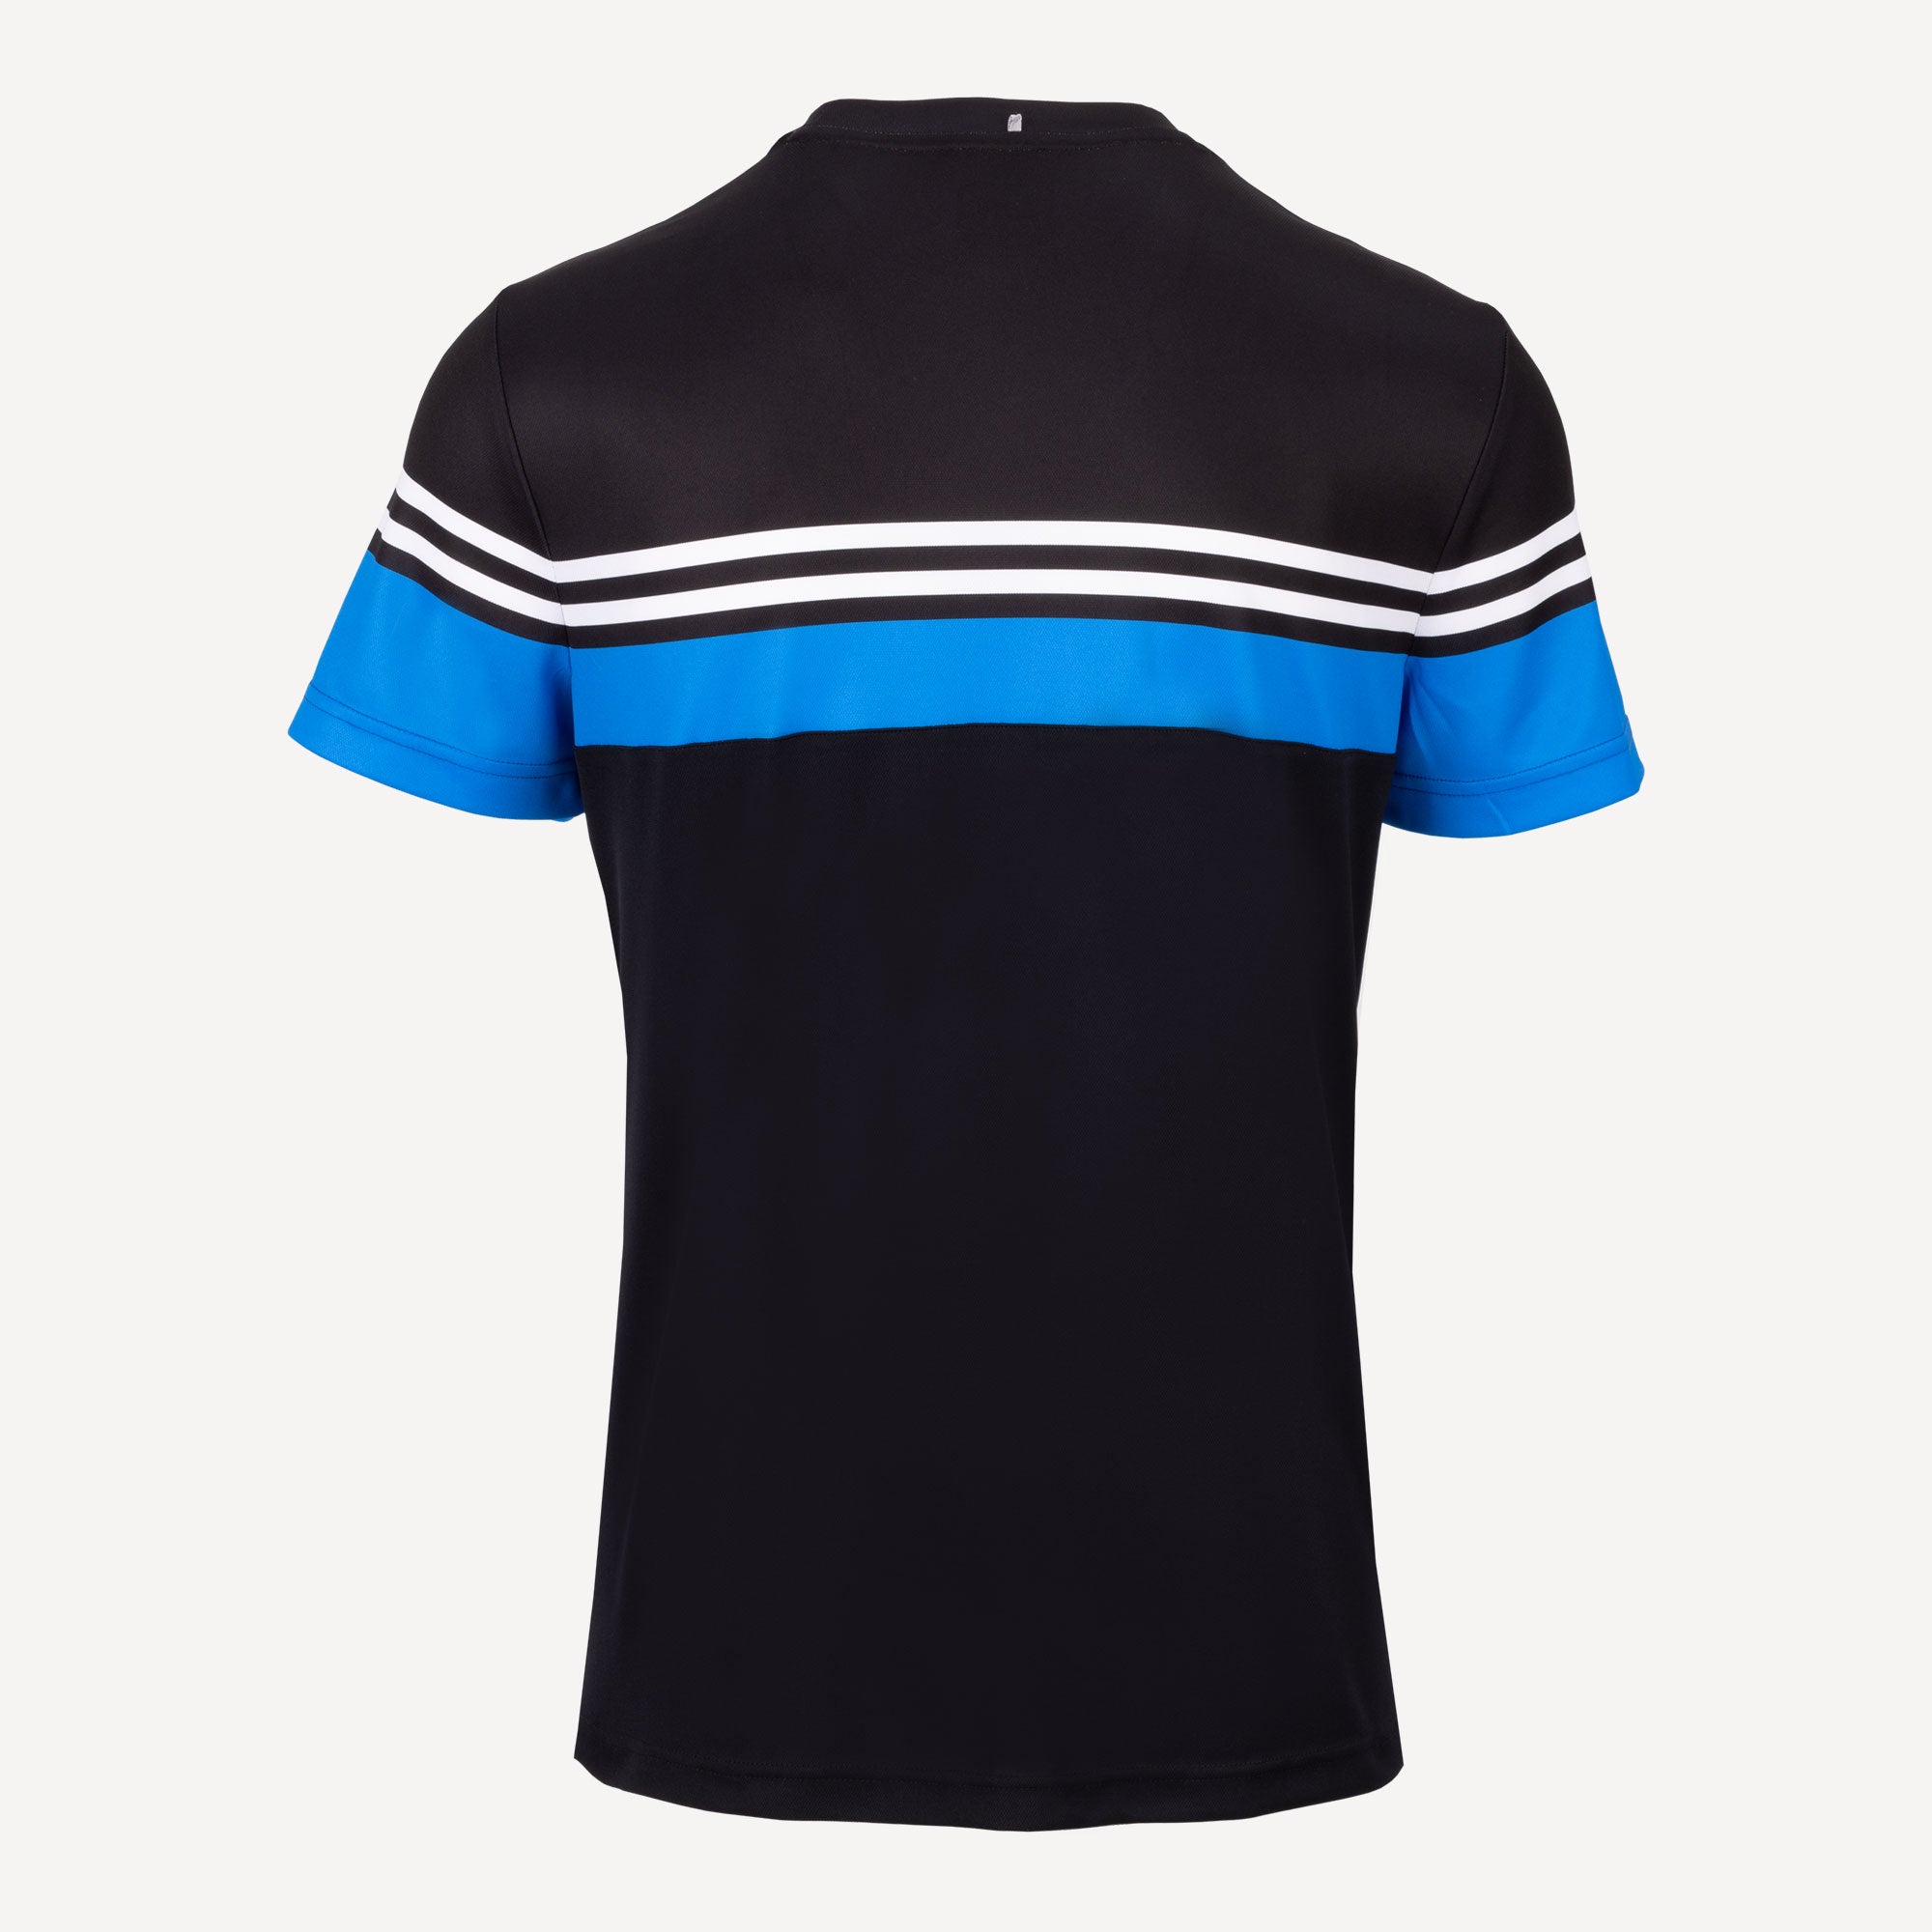 Fila Malte Men's Tennis Shirt Black (2)